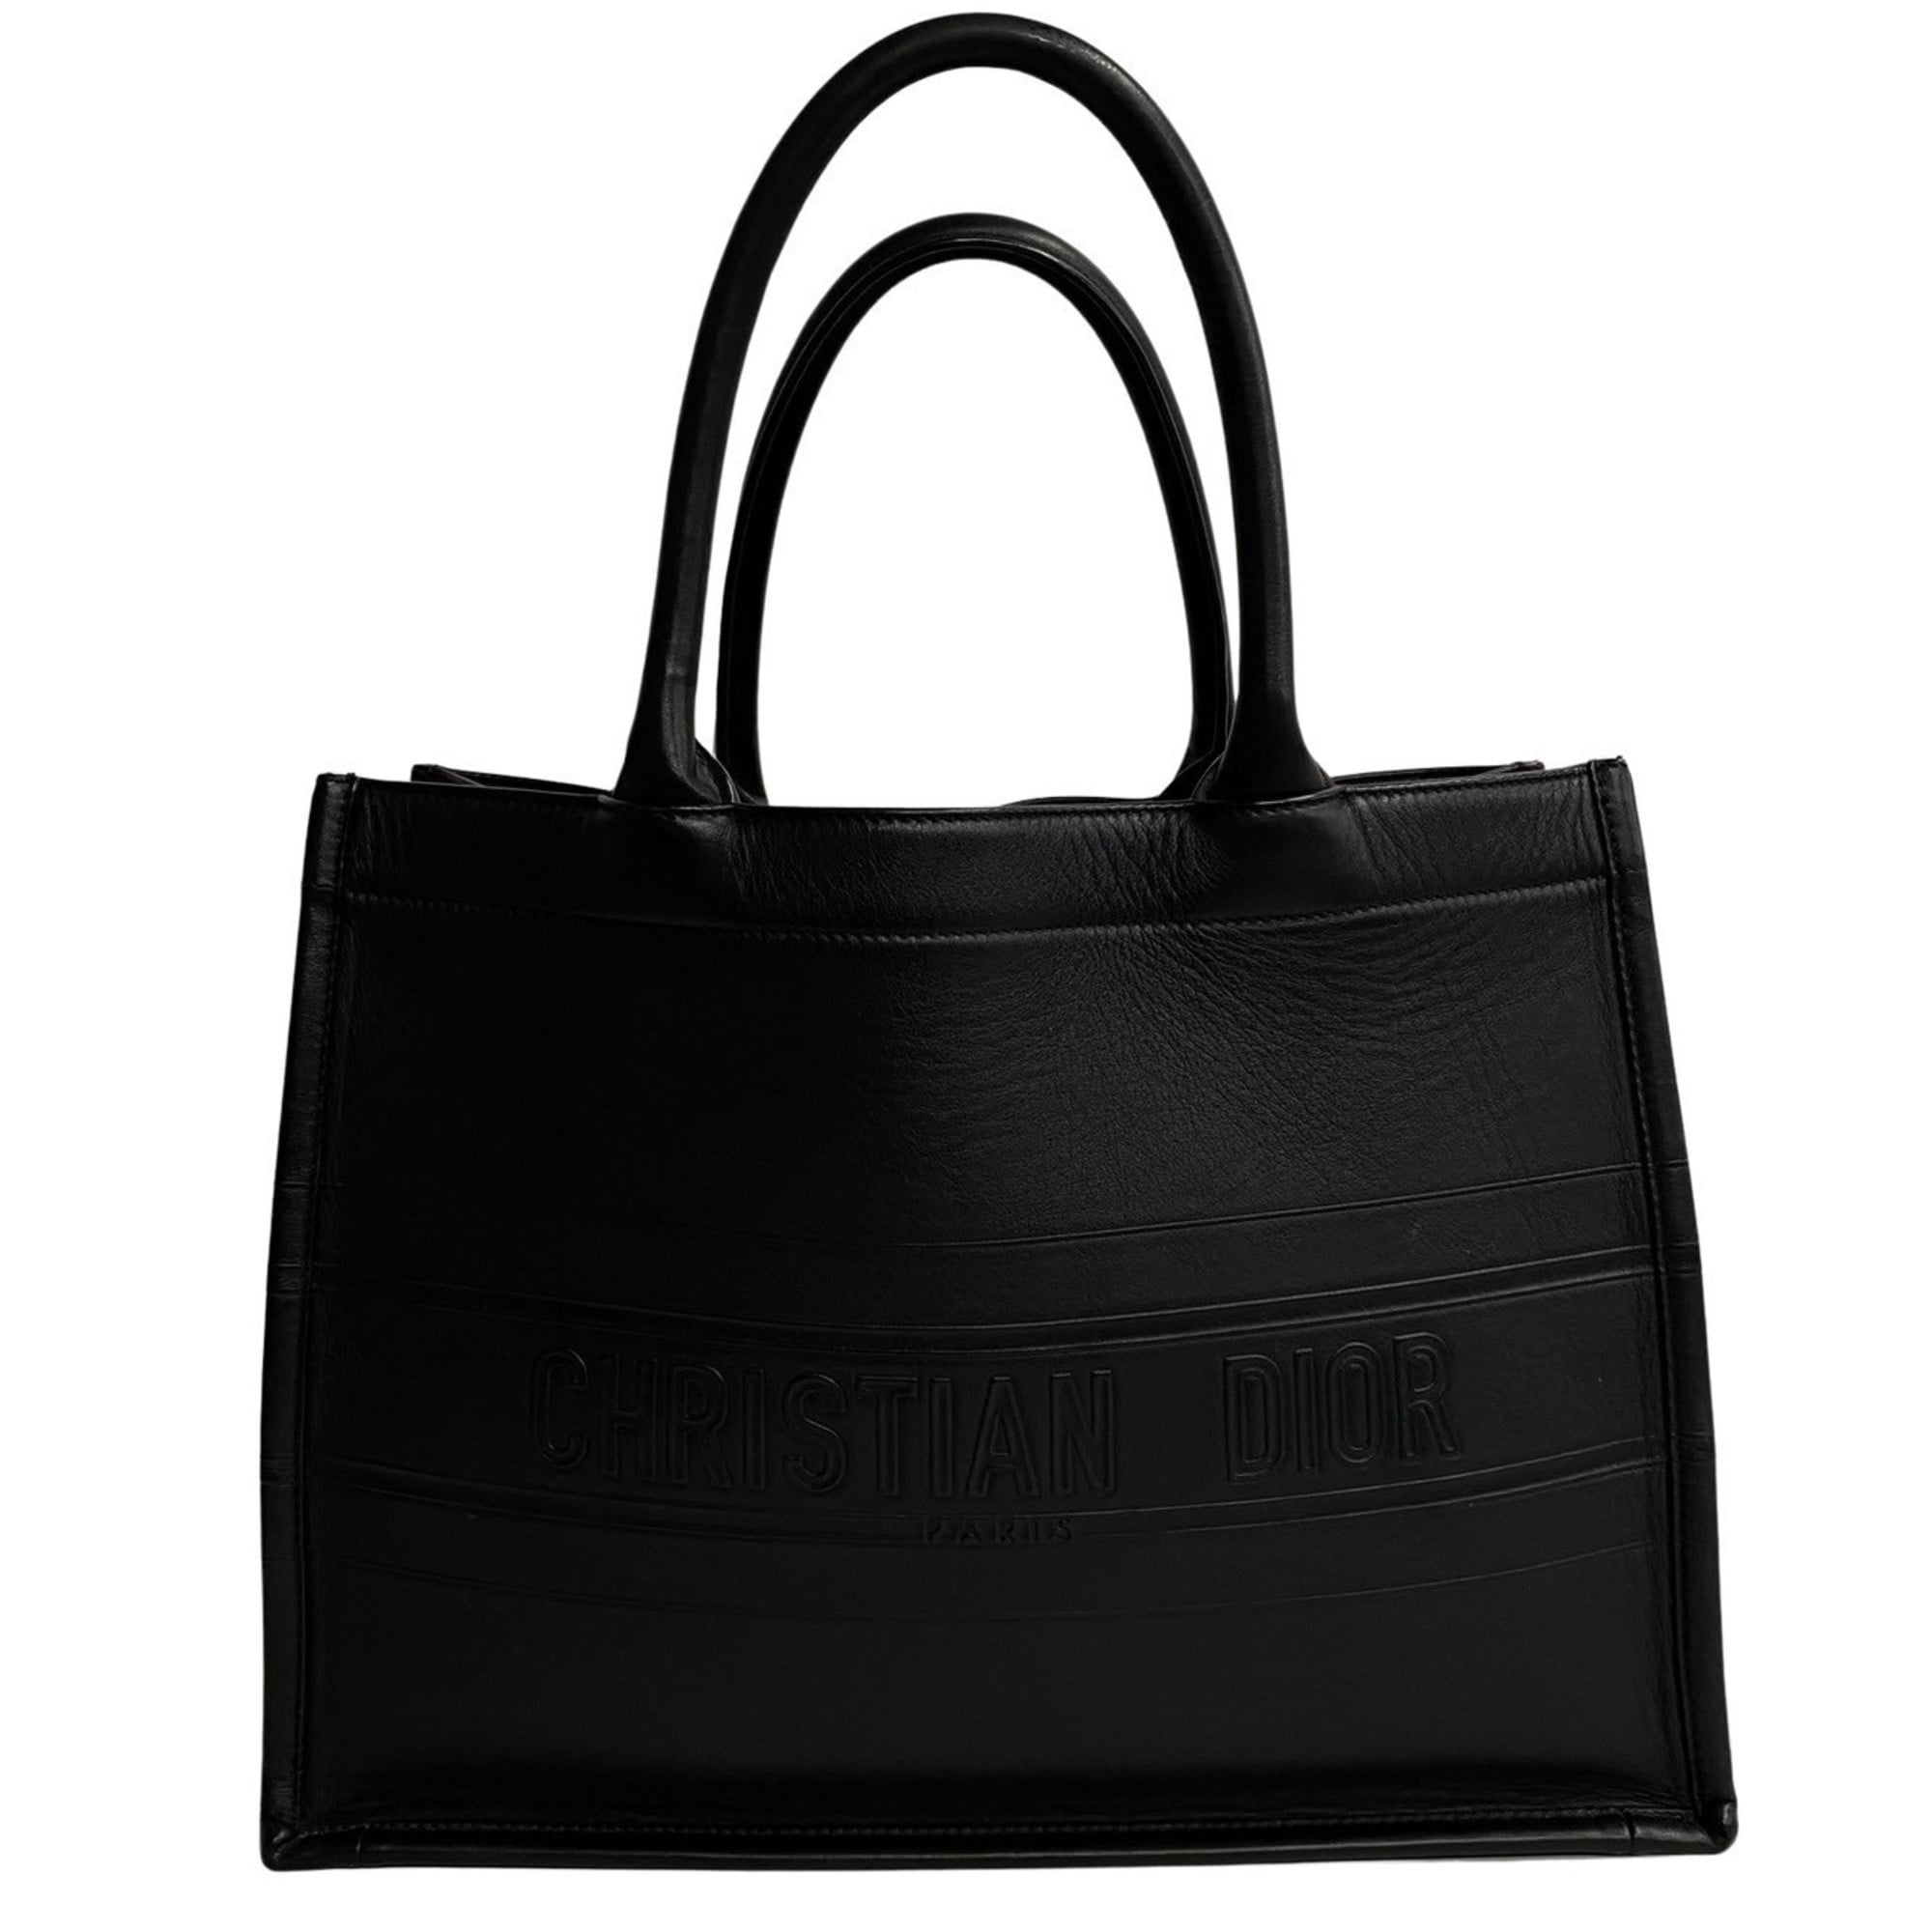 LOT:80 | CHRISTIAN DIOR - a limited edition Mini Lady Dior handbag.